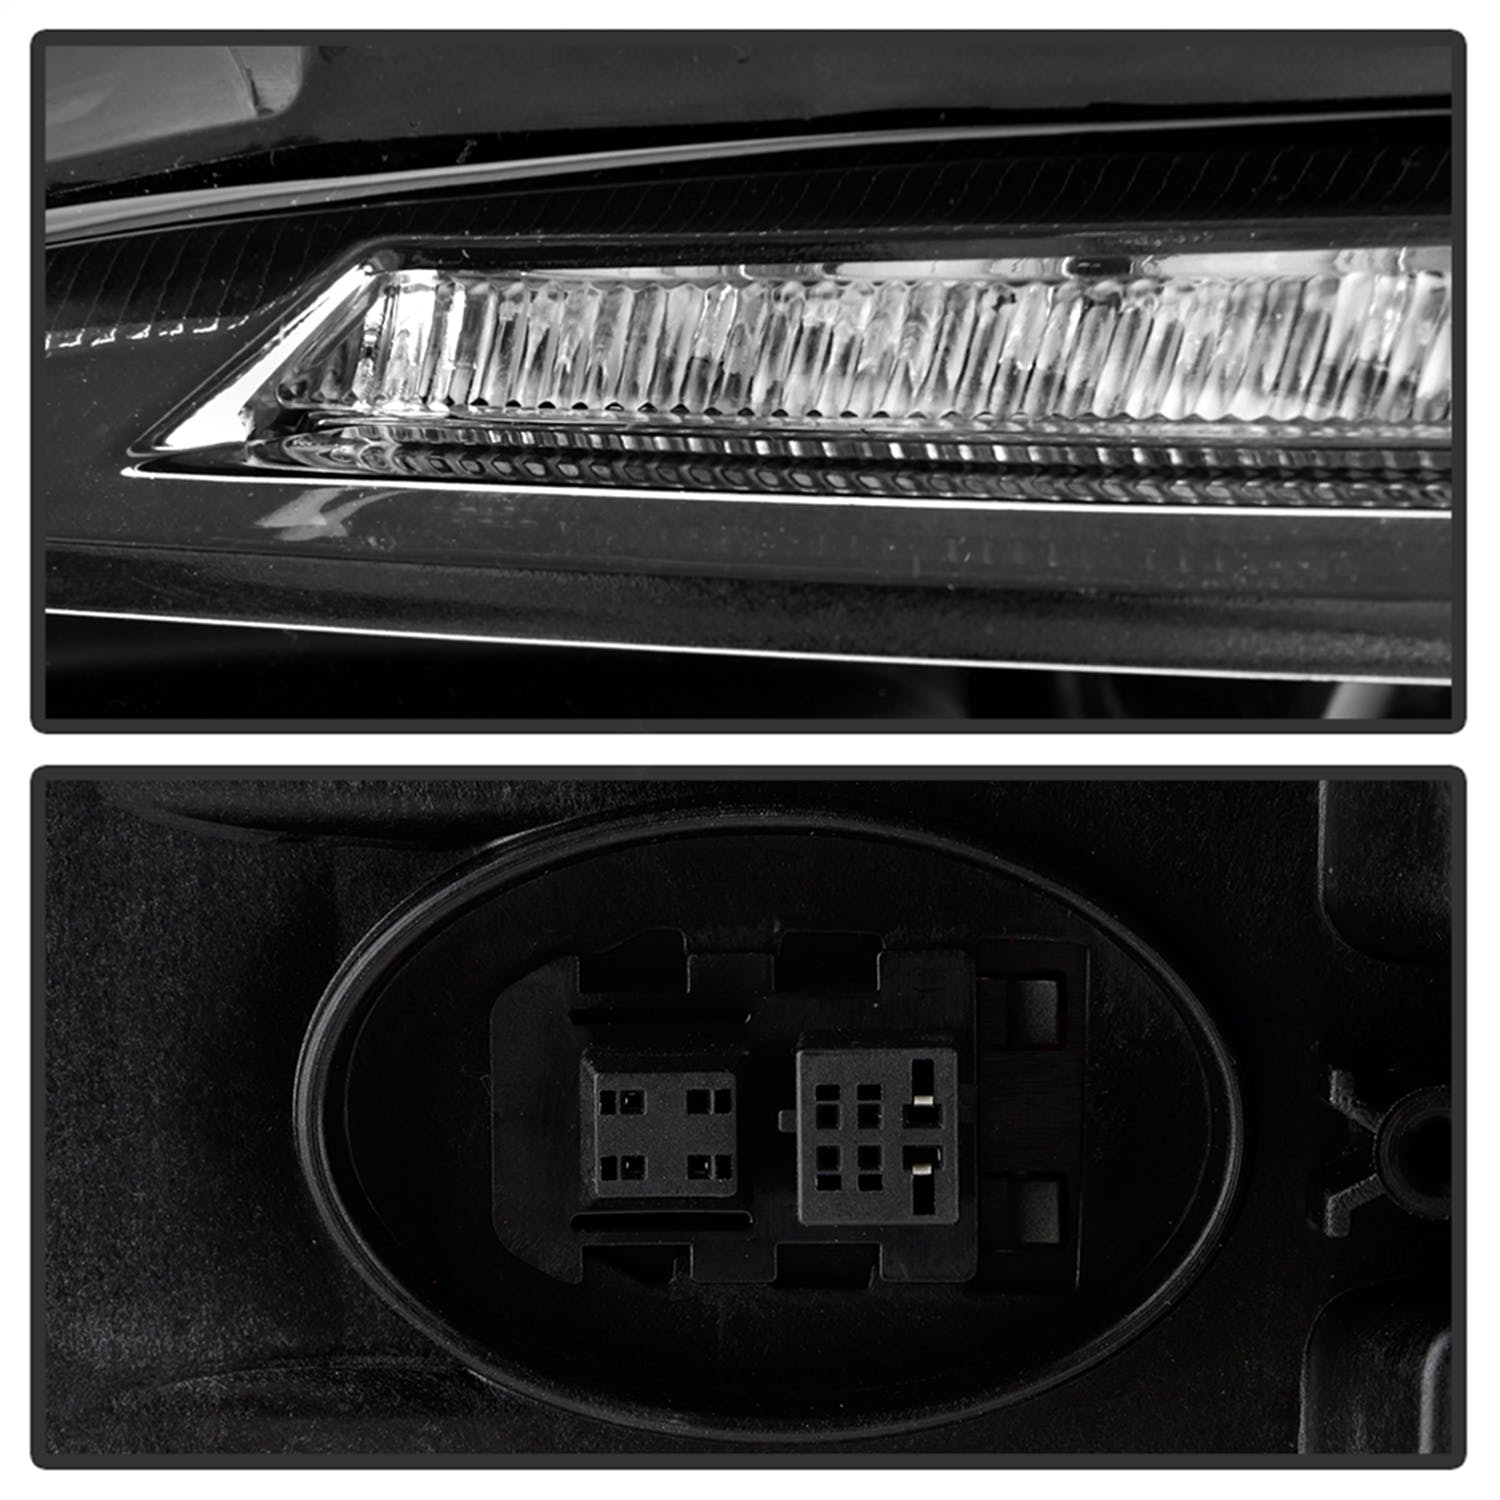 Spyder Auto 5088208 Projector Headlights